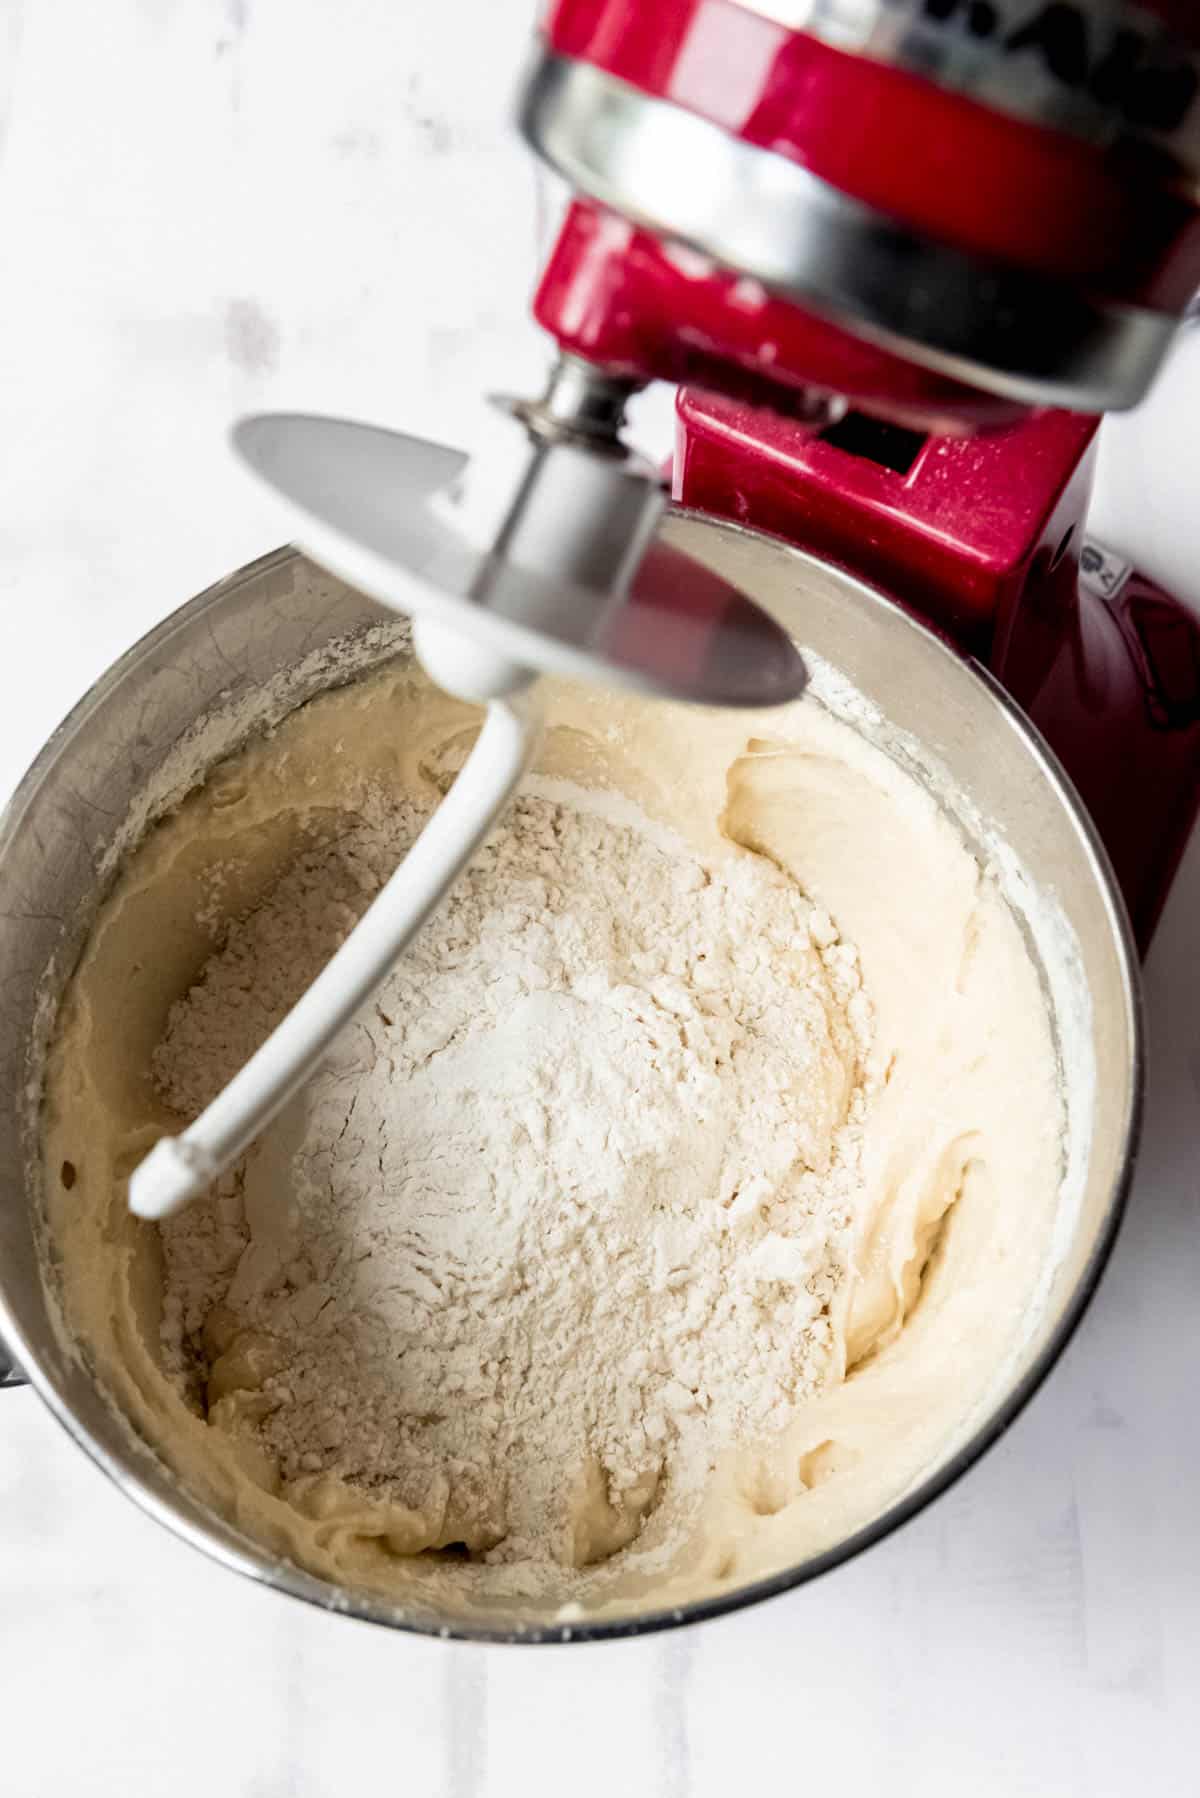 Adding flour to make a yeast dough.